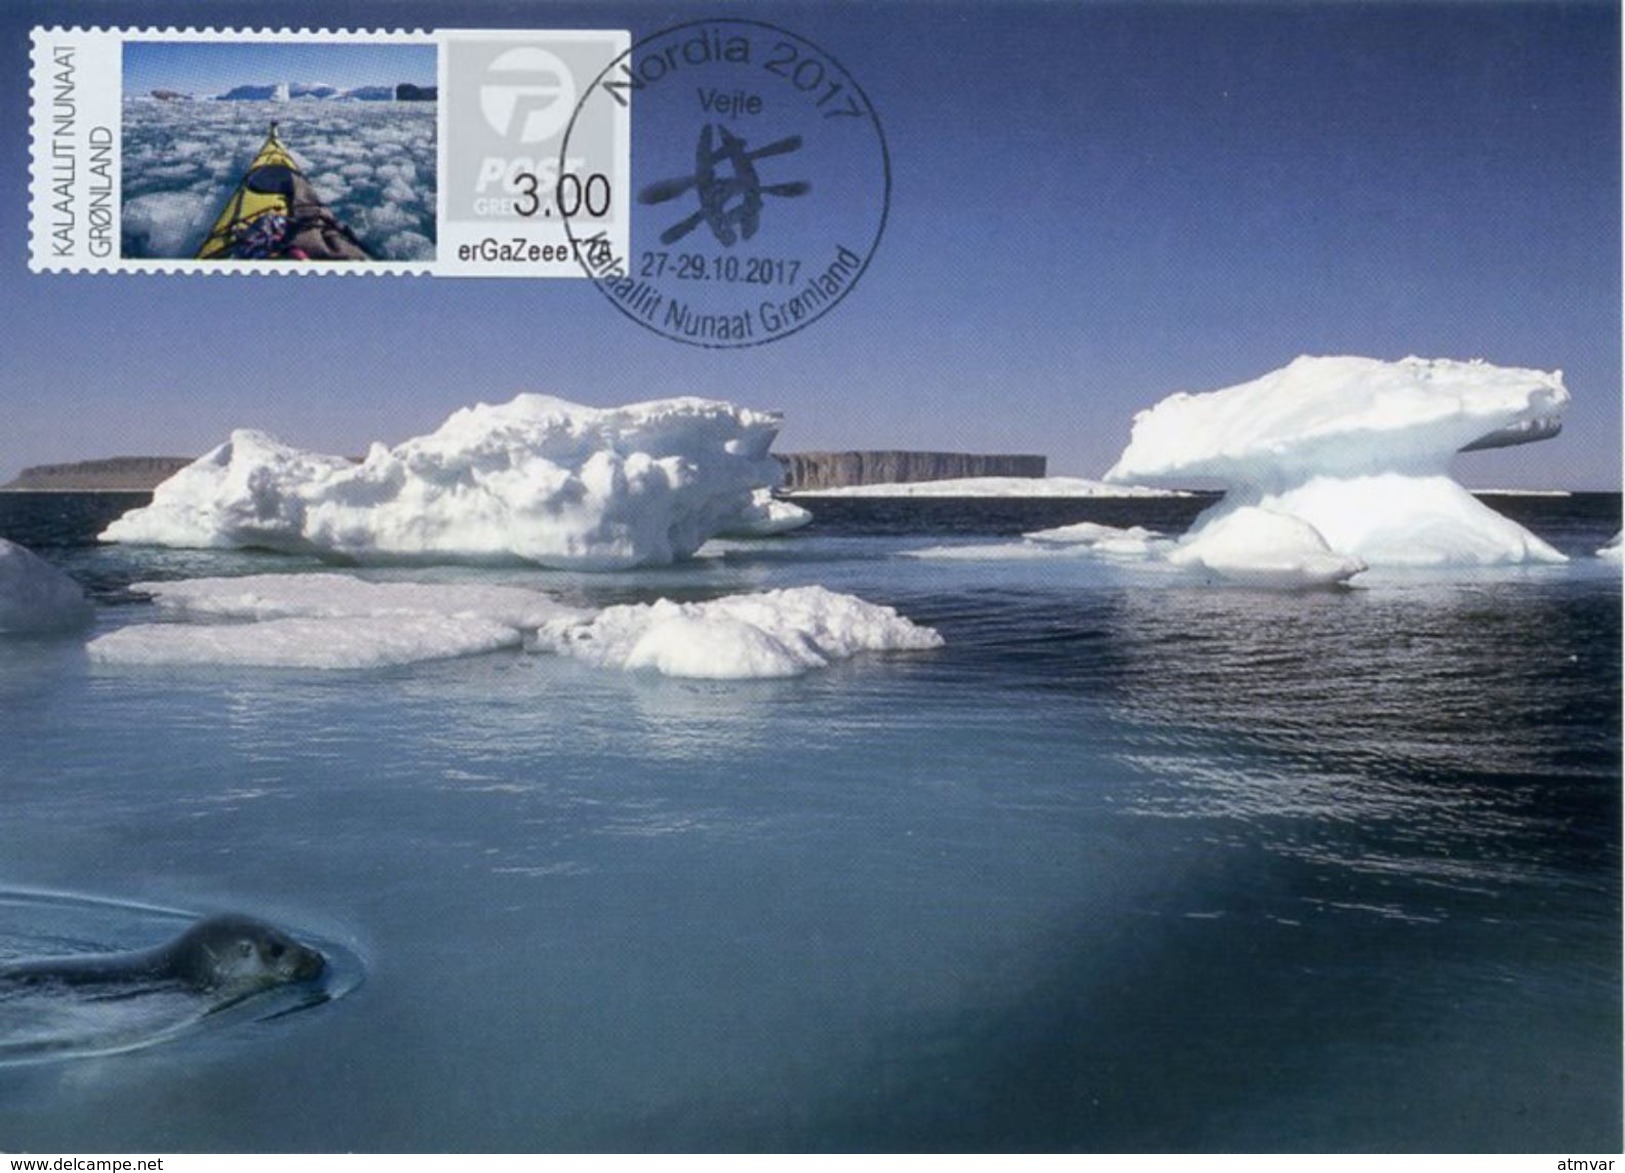 GREENLAND GROENLAND (2017) - Carte Maximum Card ATM - Harp Seal In Greenlandic Waters, Phoque, Iceberg, Kayak  - NORDIA - Automatenmarken